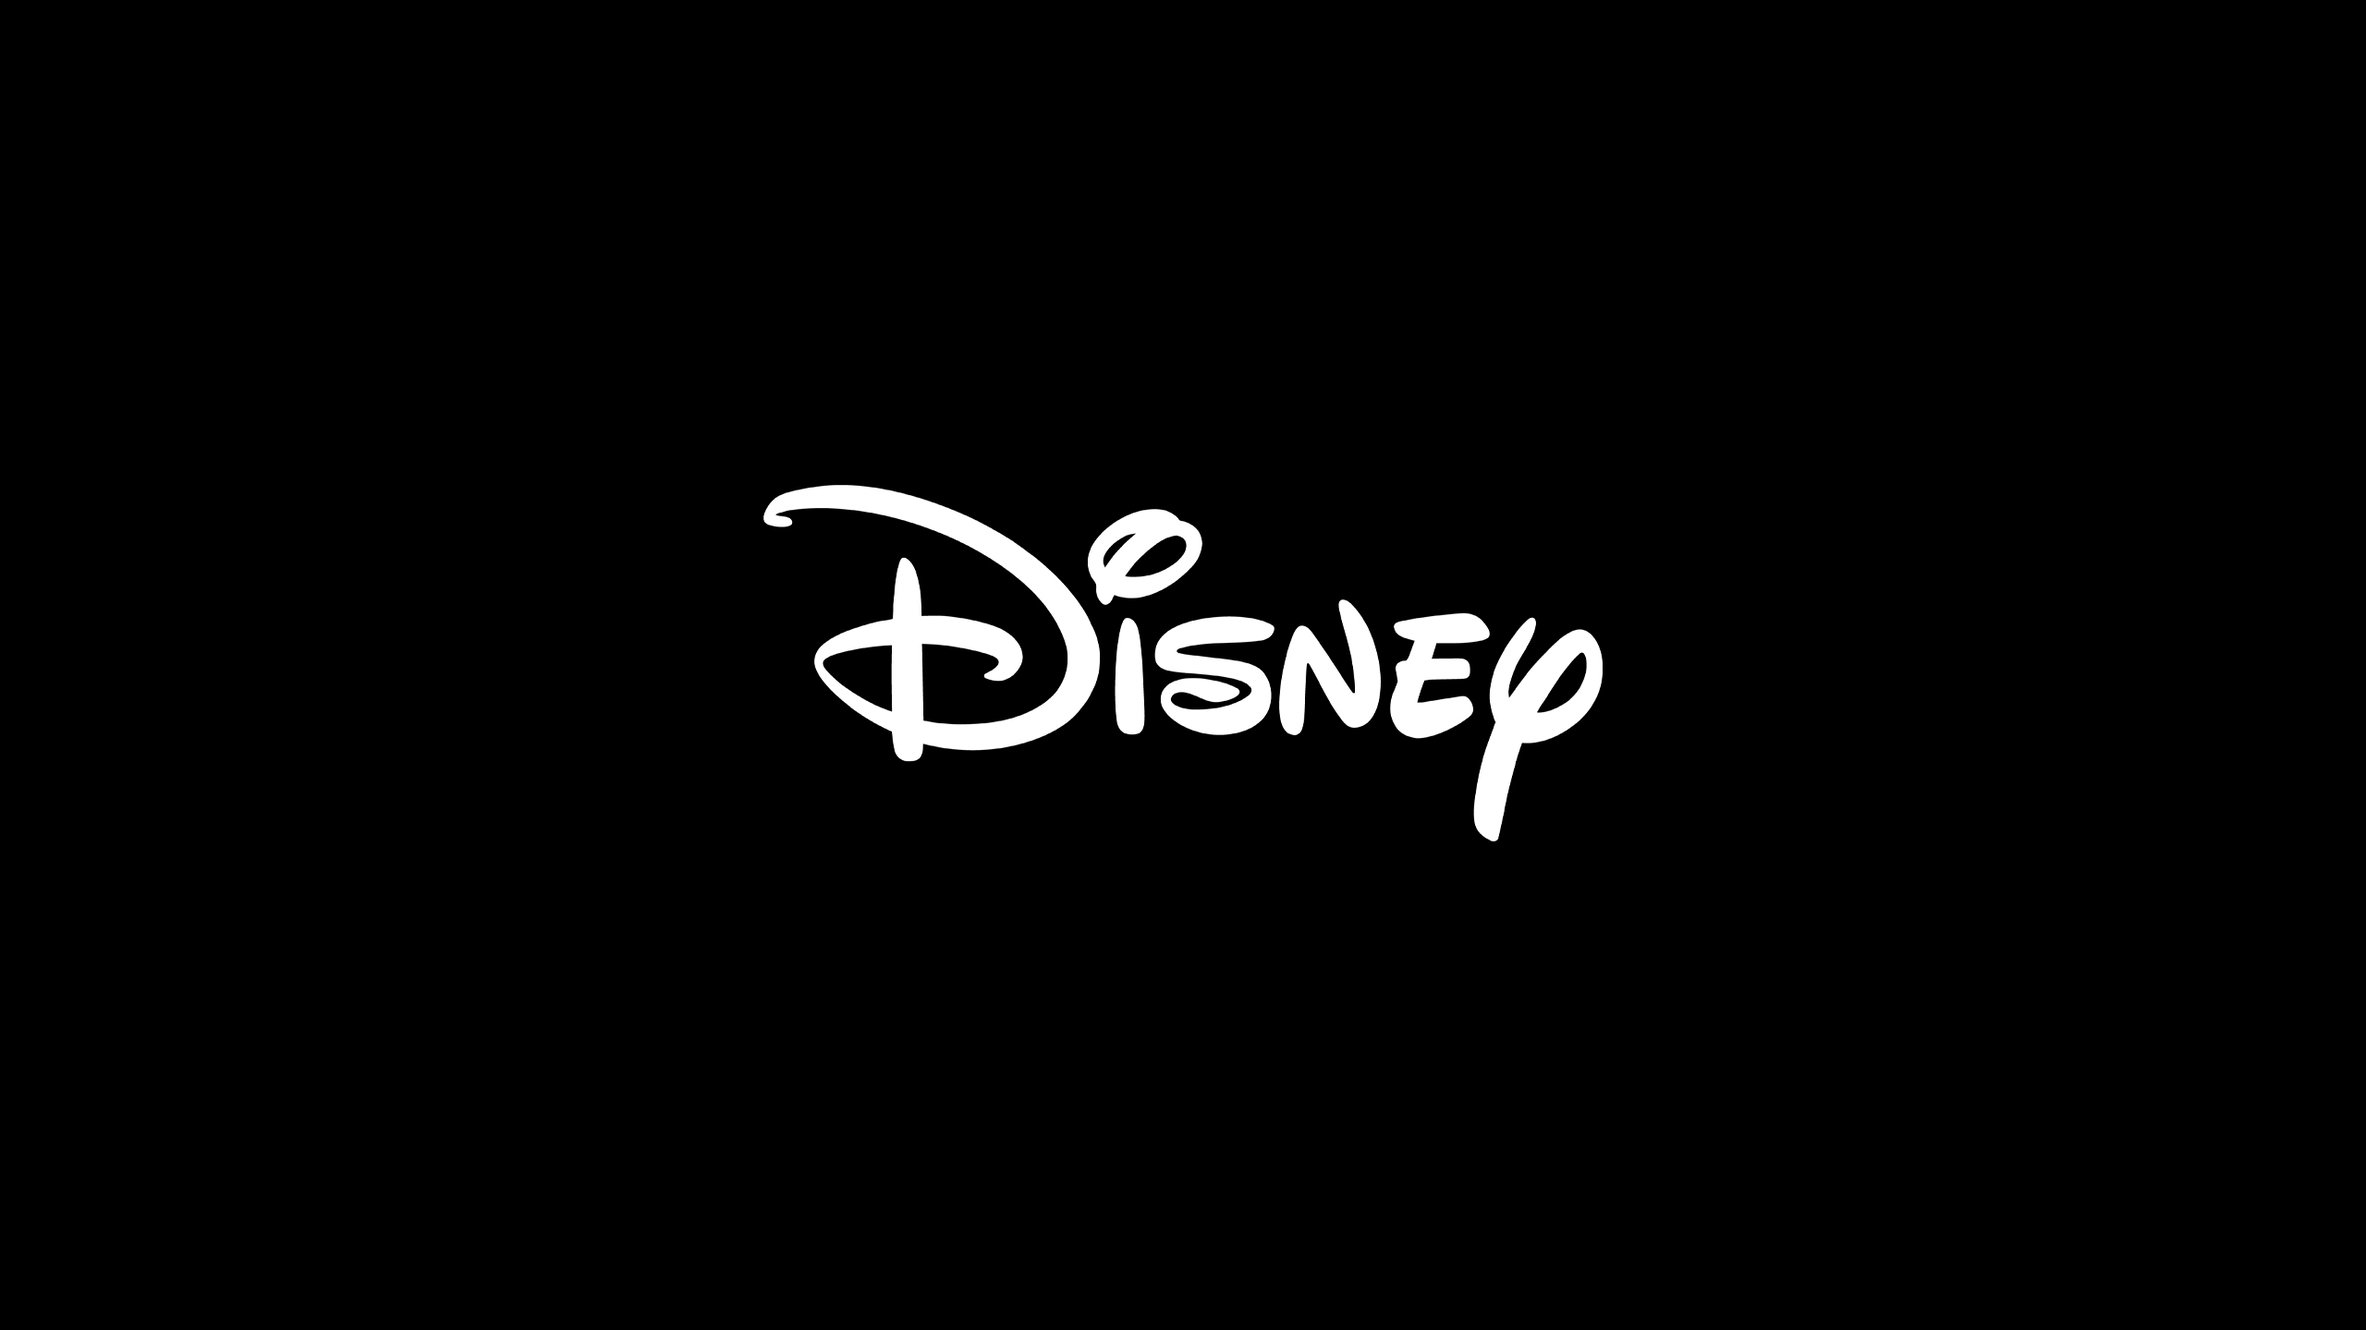 Disney Film (Fu Manchu Extra)